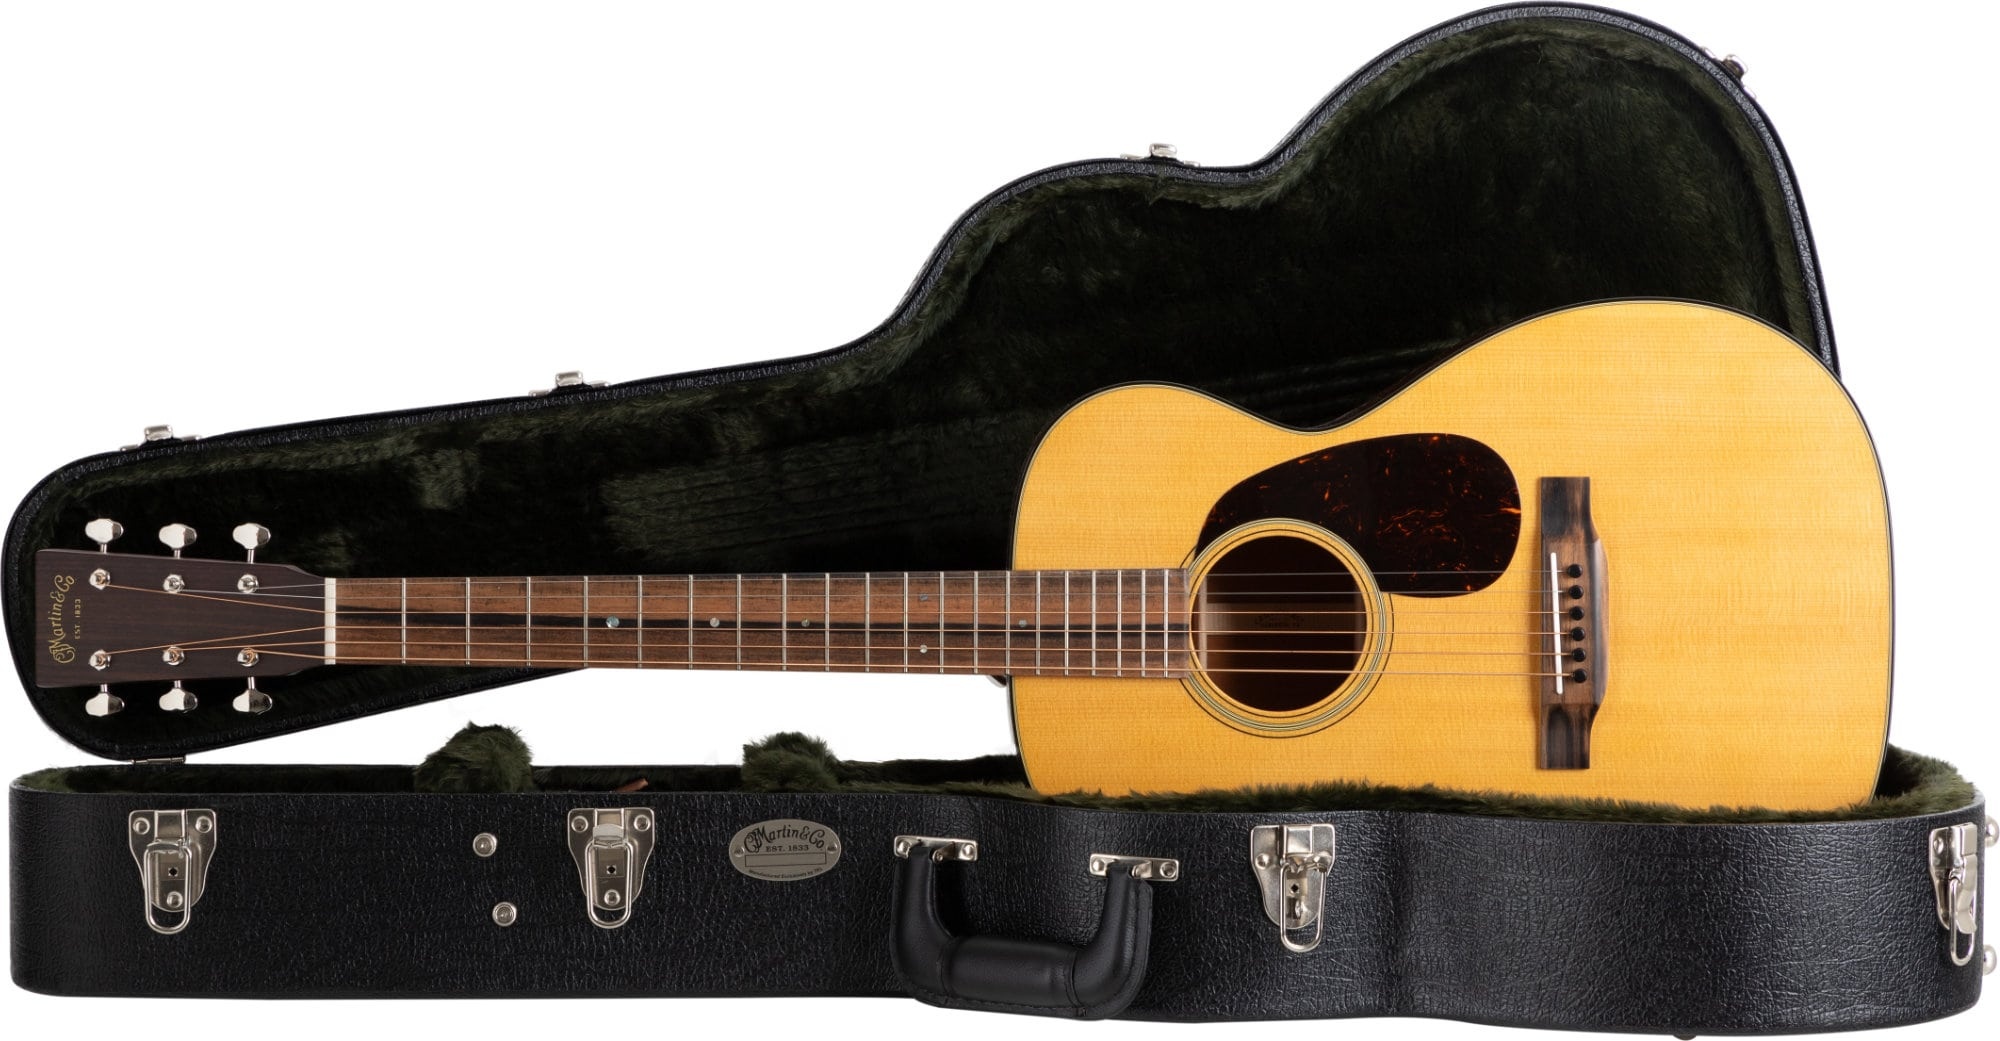 Martin Guitars 0-18